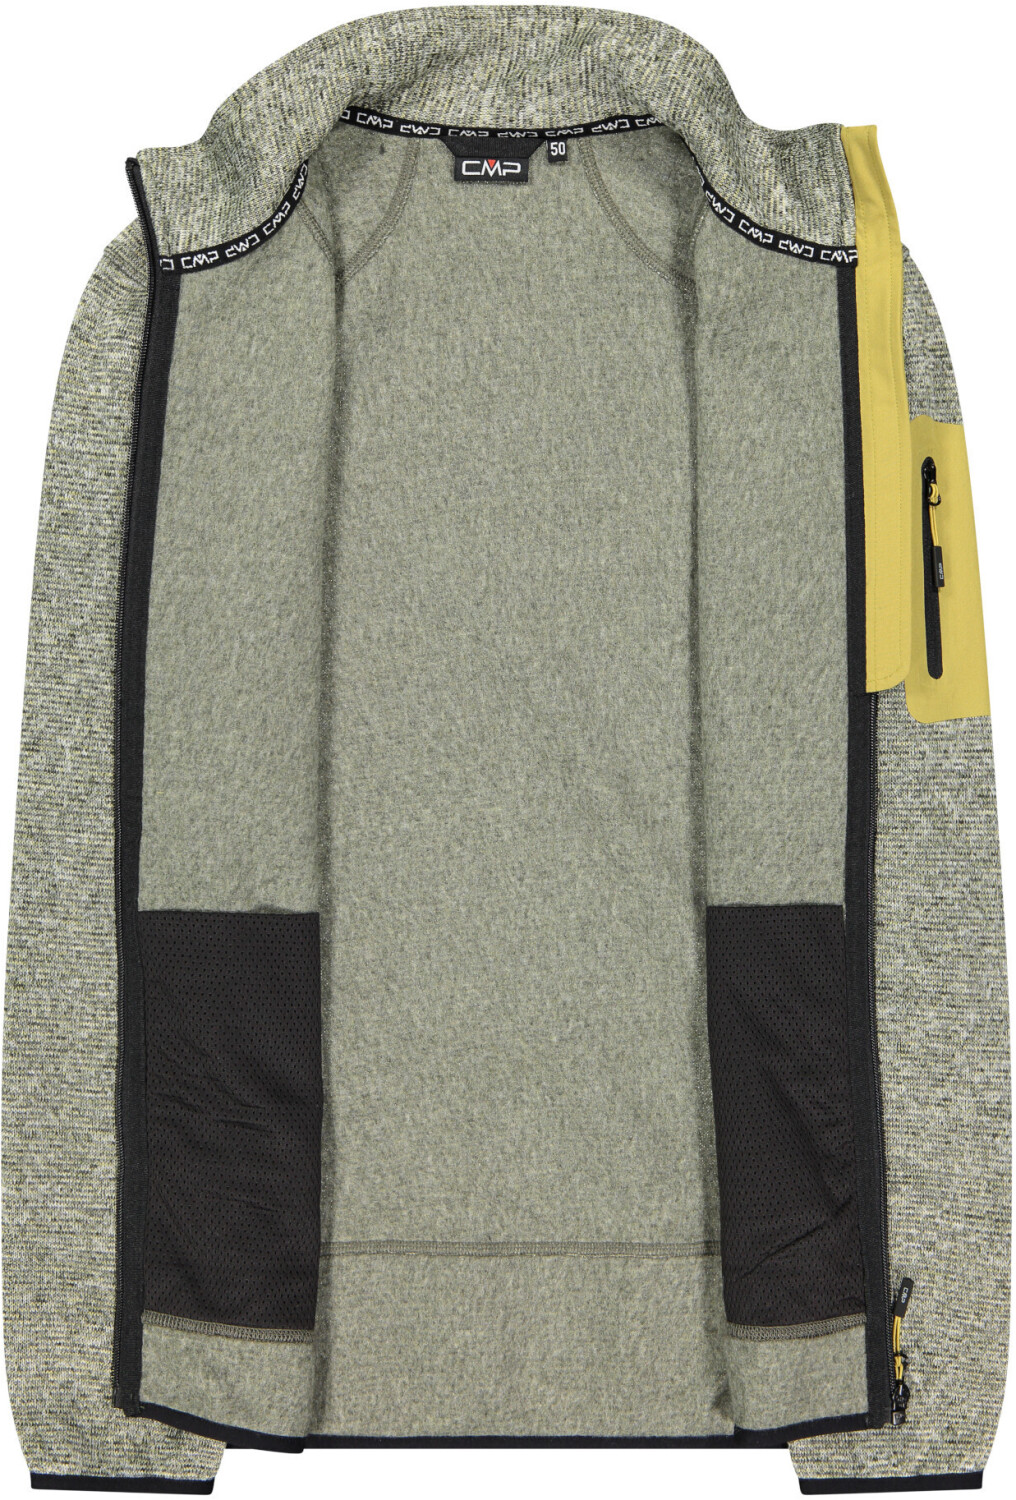 CMP Men Fleece Jacket (3H60747N) precios 55,00 desde | € Compara idealo en oil green/agave